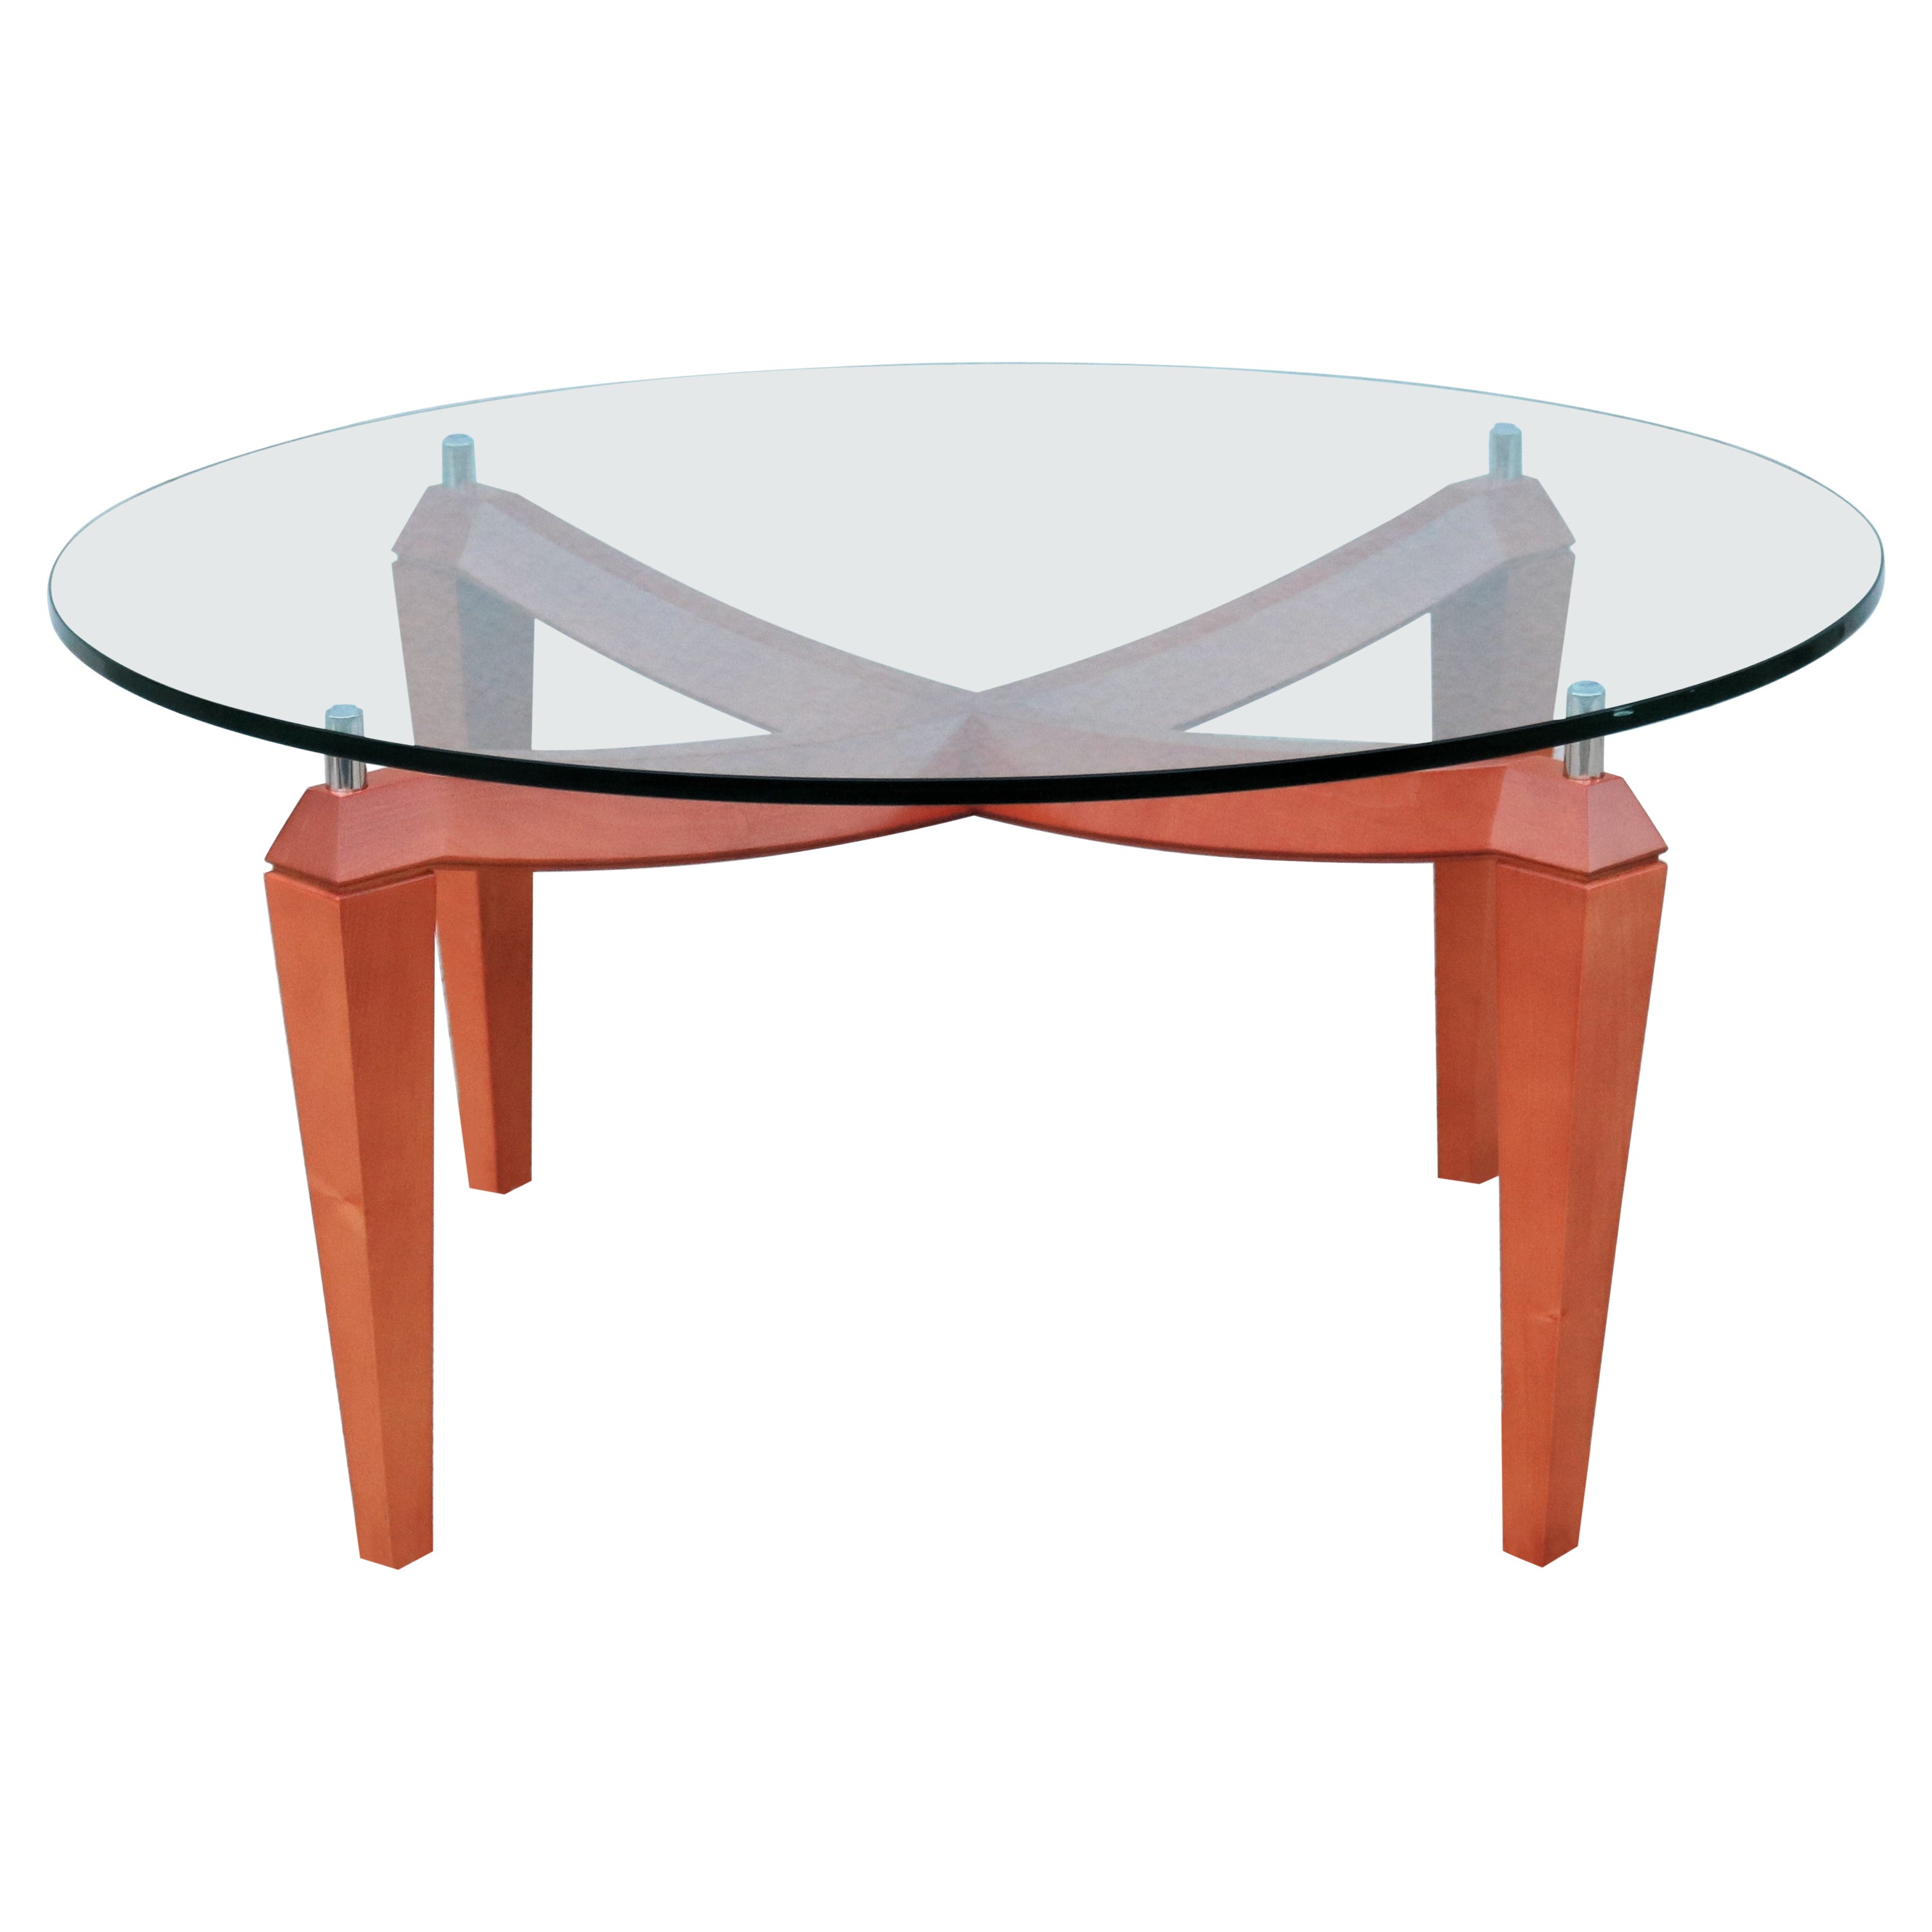 Table basse ronde italienne moderne en bois de cerisier et verre transparent